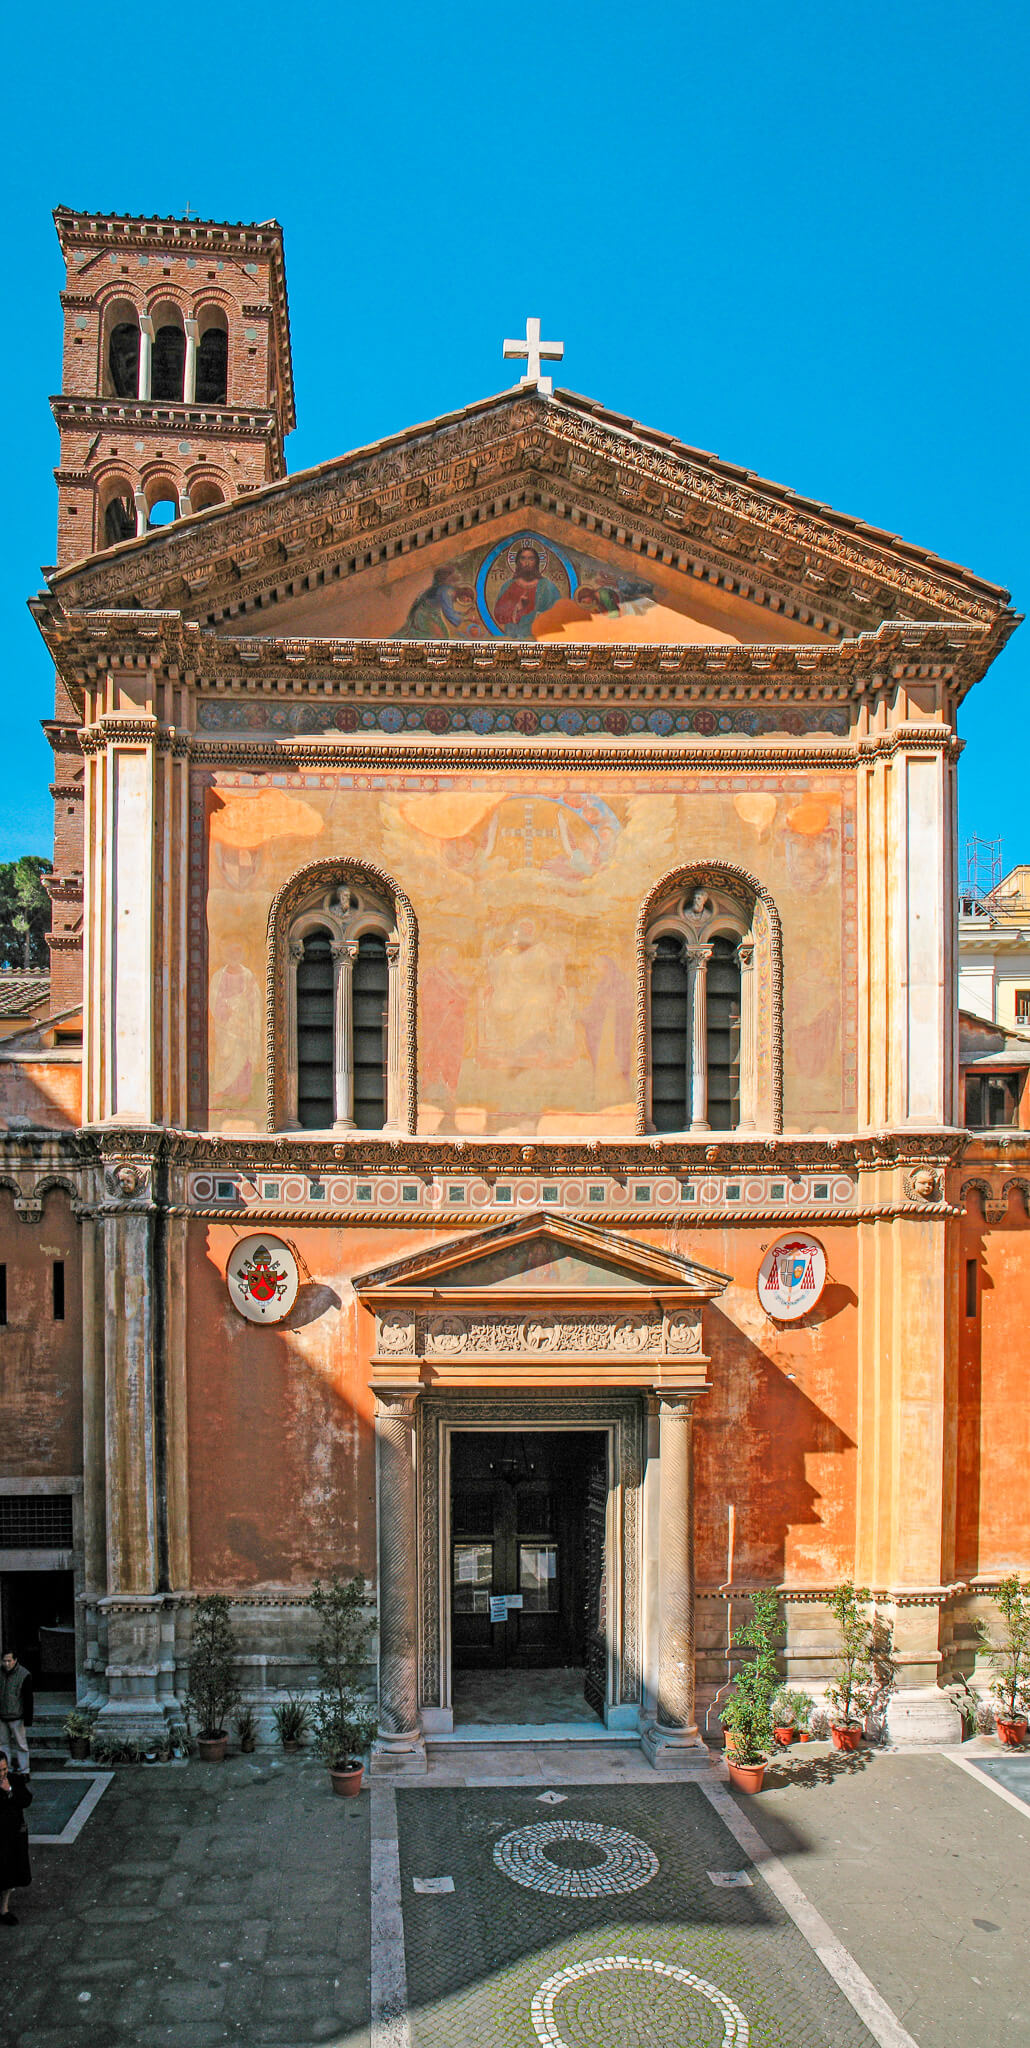 Facade of Santa Prudenziana in Rome